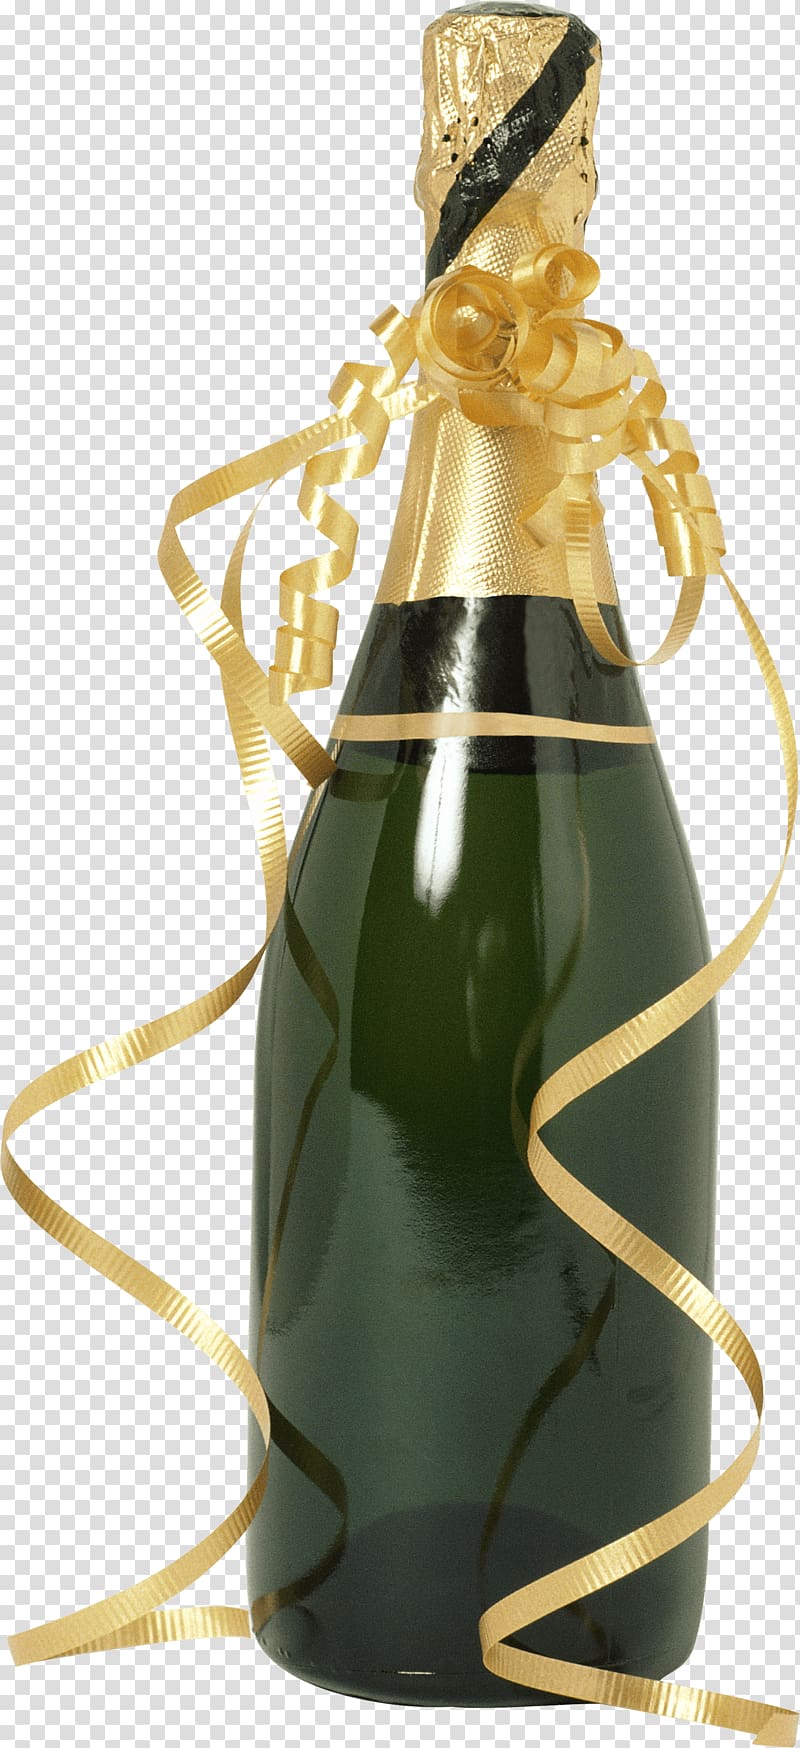 green glass bottle, Gift Champagne Bottle transparent background PNG clipart